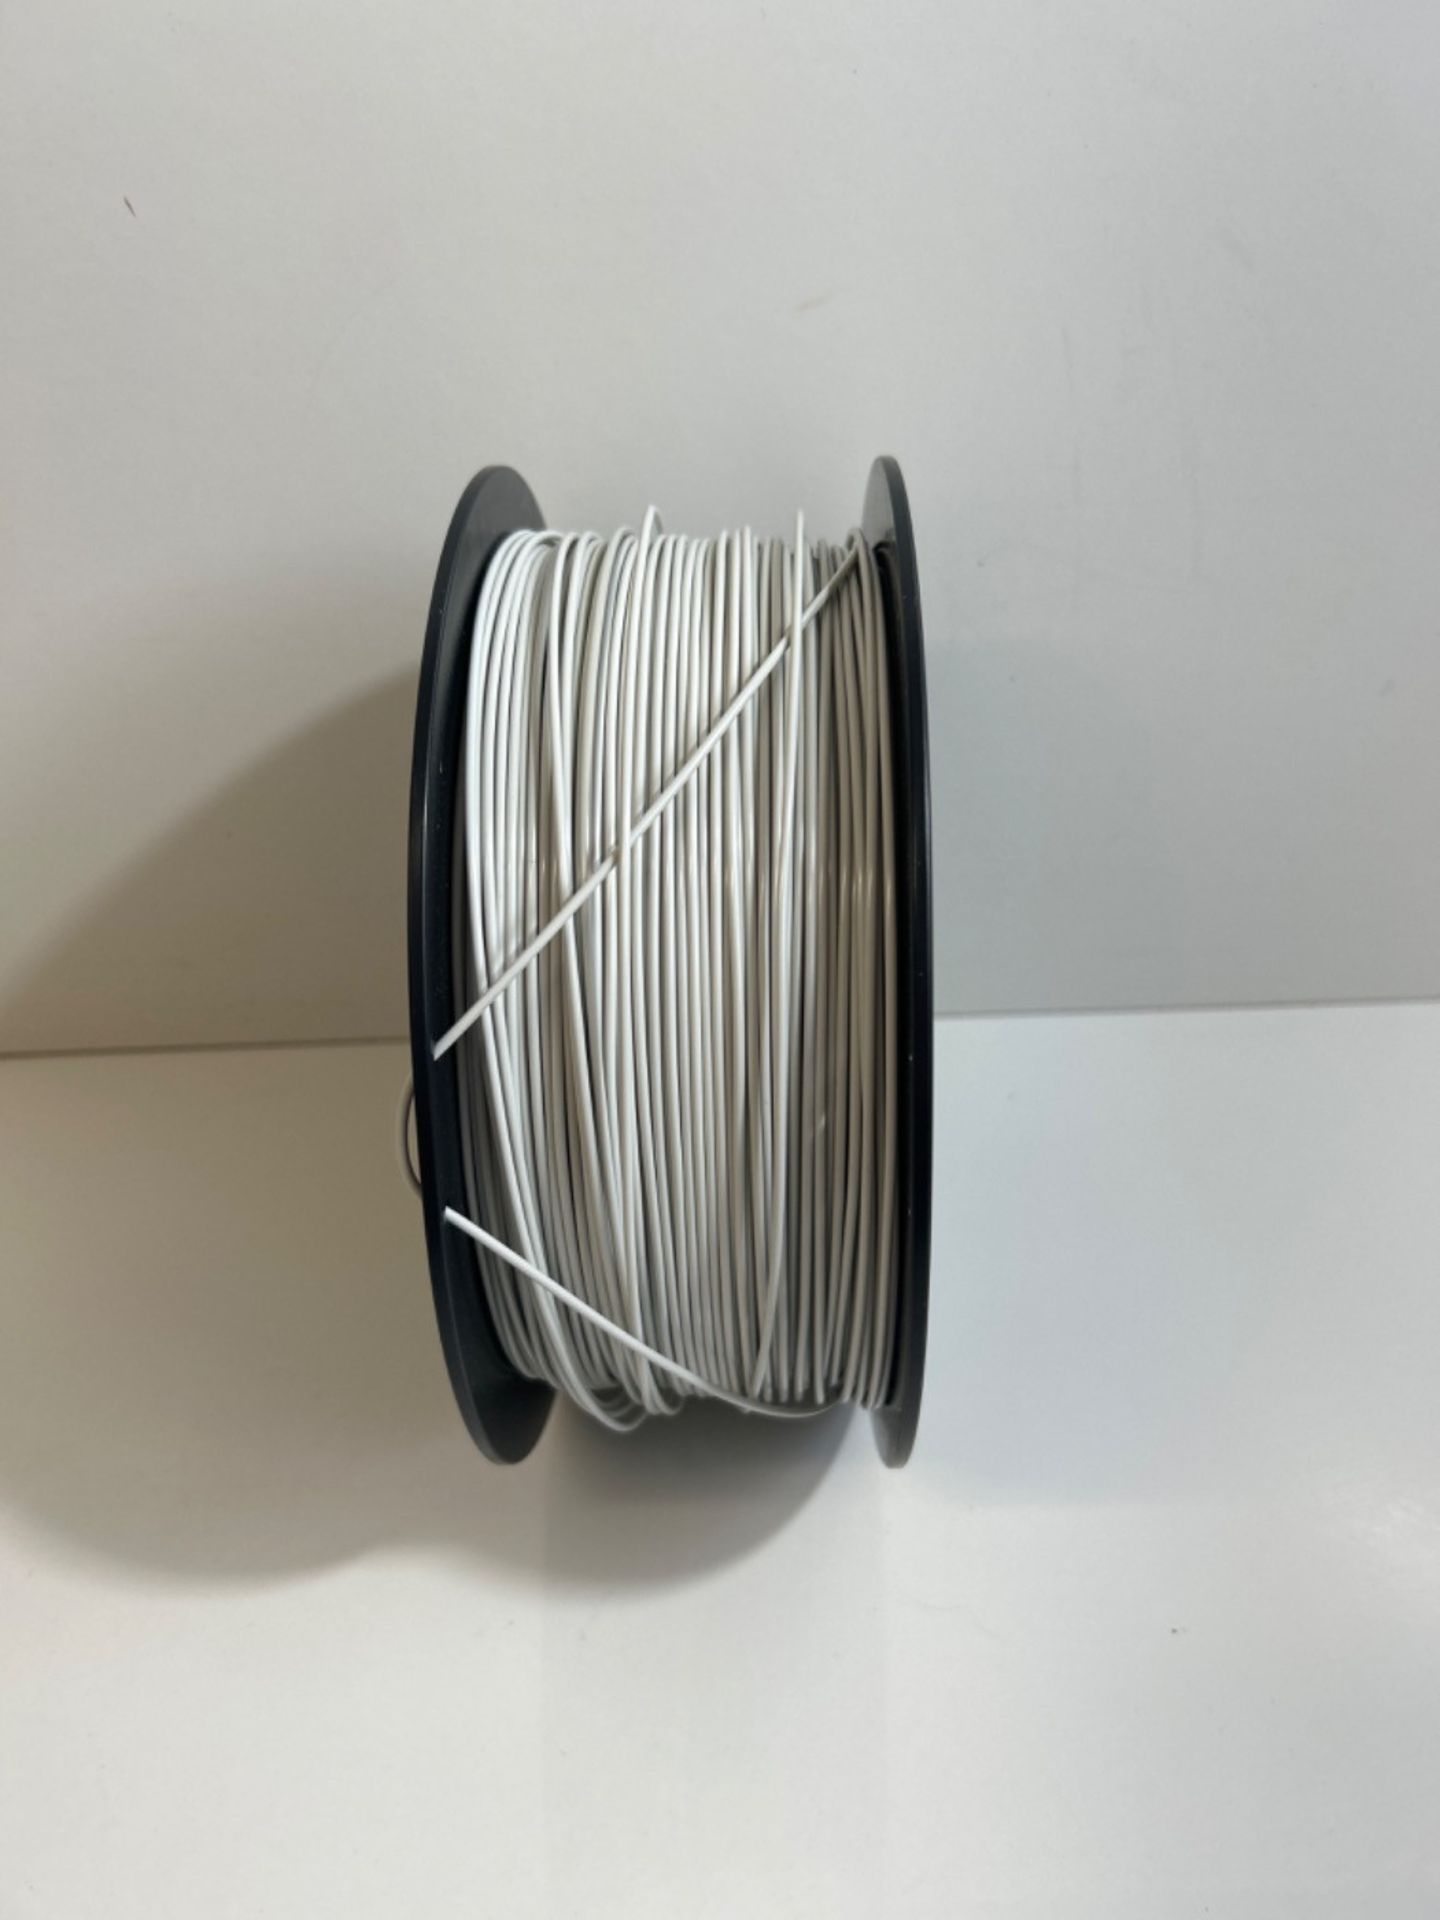 Amazon Basics PLA 3D Printer Filament, 1.75 mm, Light Grey , 1 kg Spool - Image 3 of 3